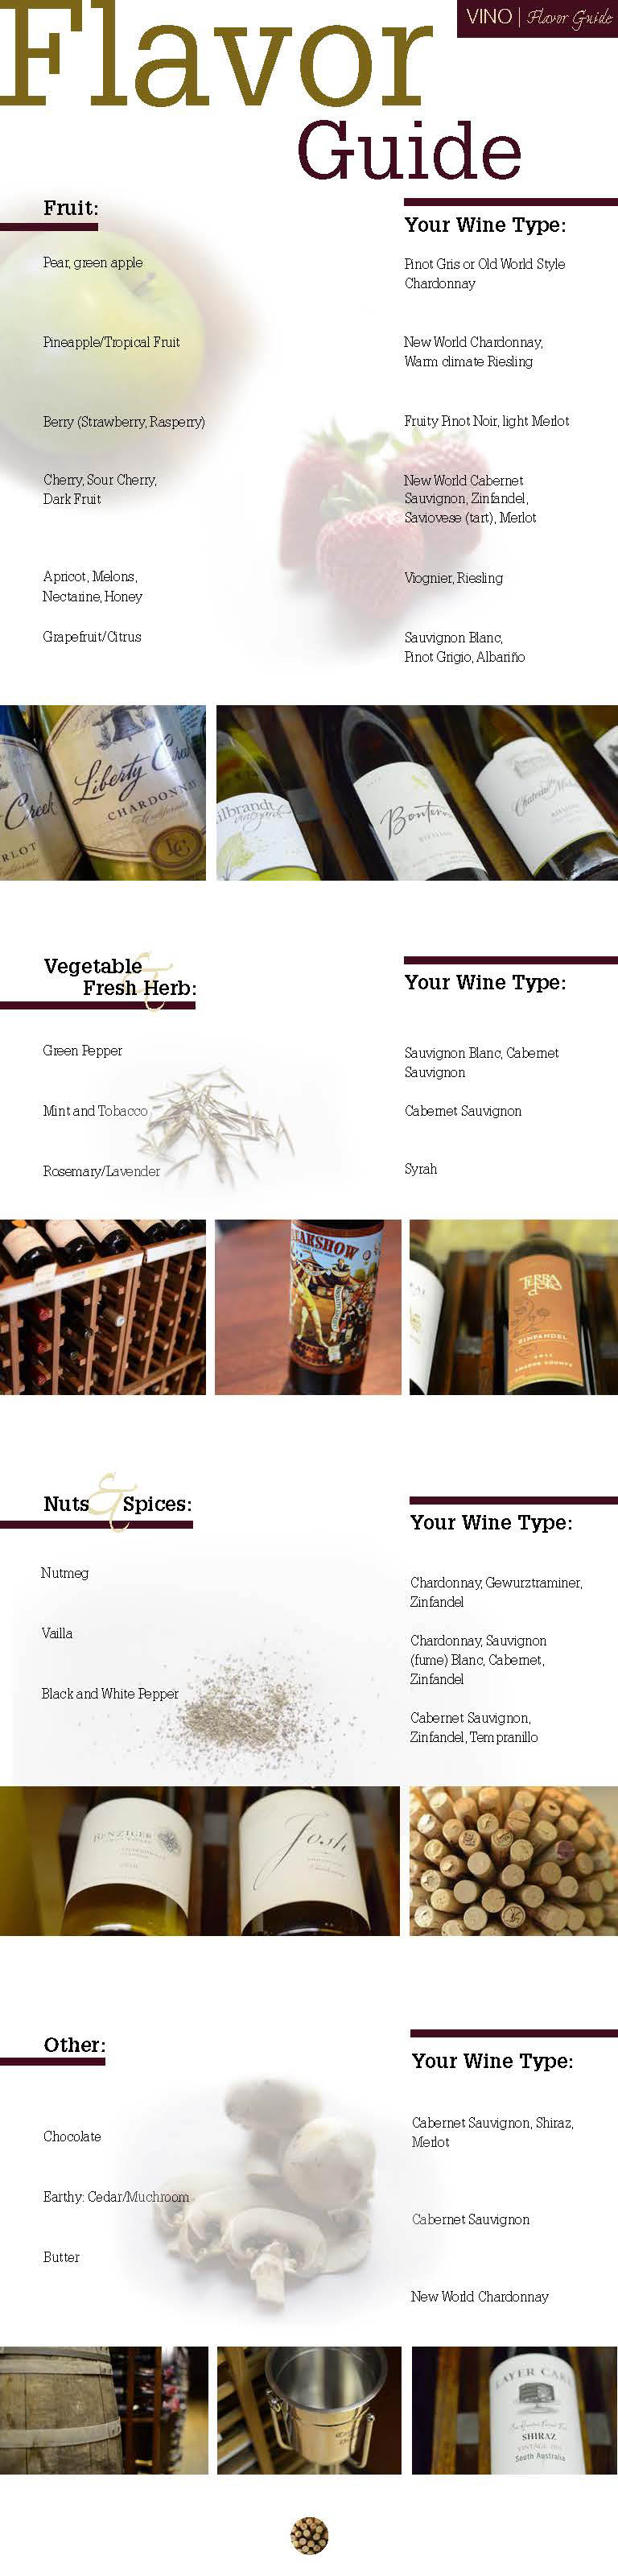 iPad magazine wine DPS app winery wine bar wine etiquette Wine Packaging corks wine pairing wine cocktails